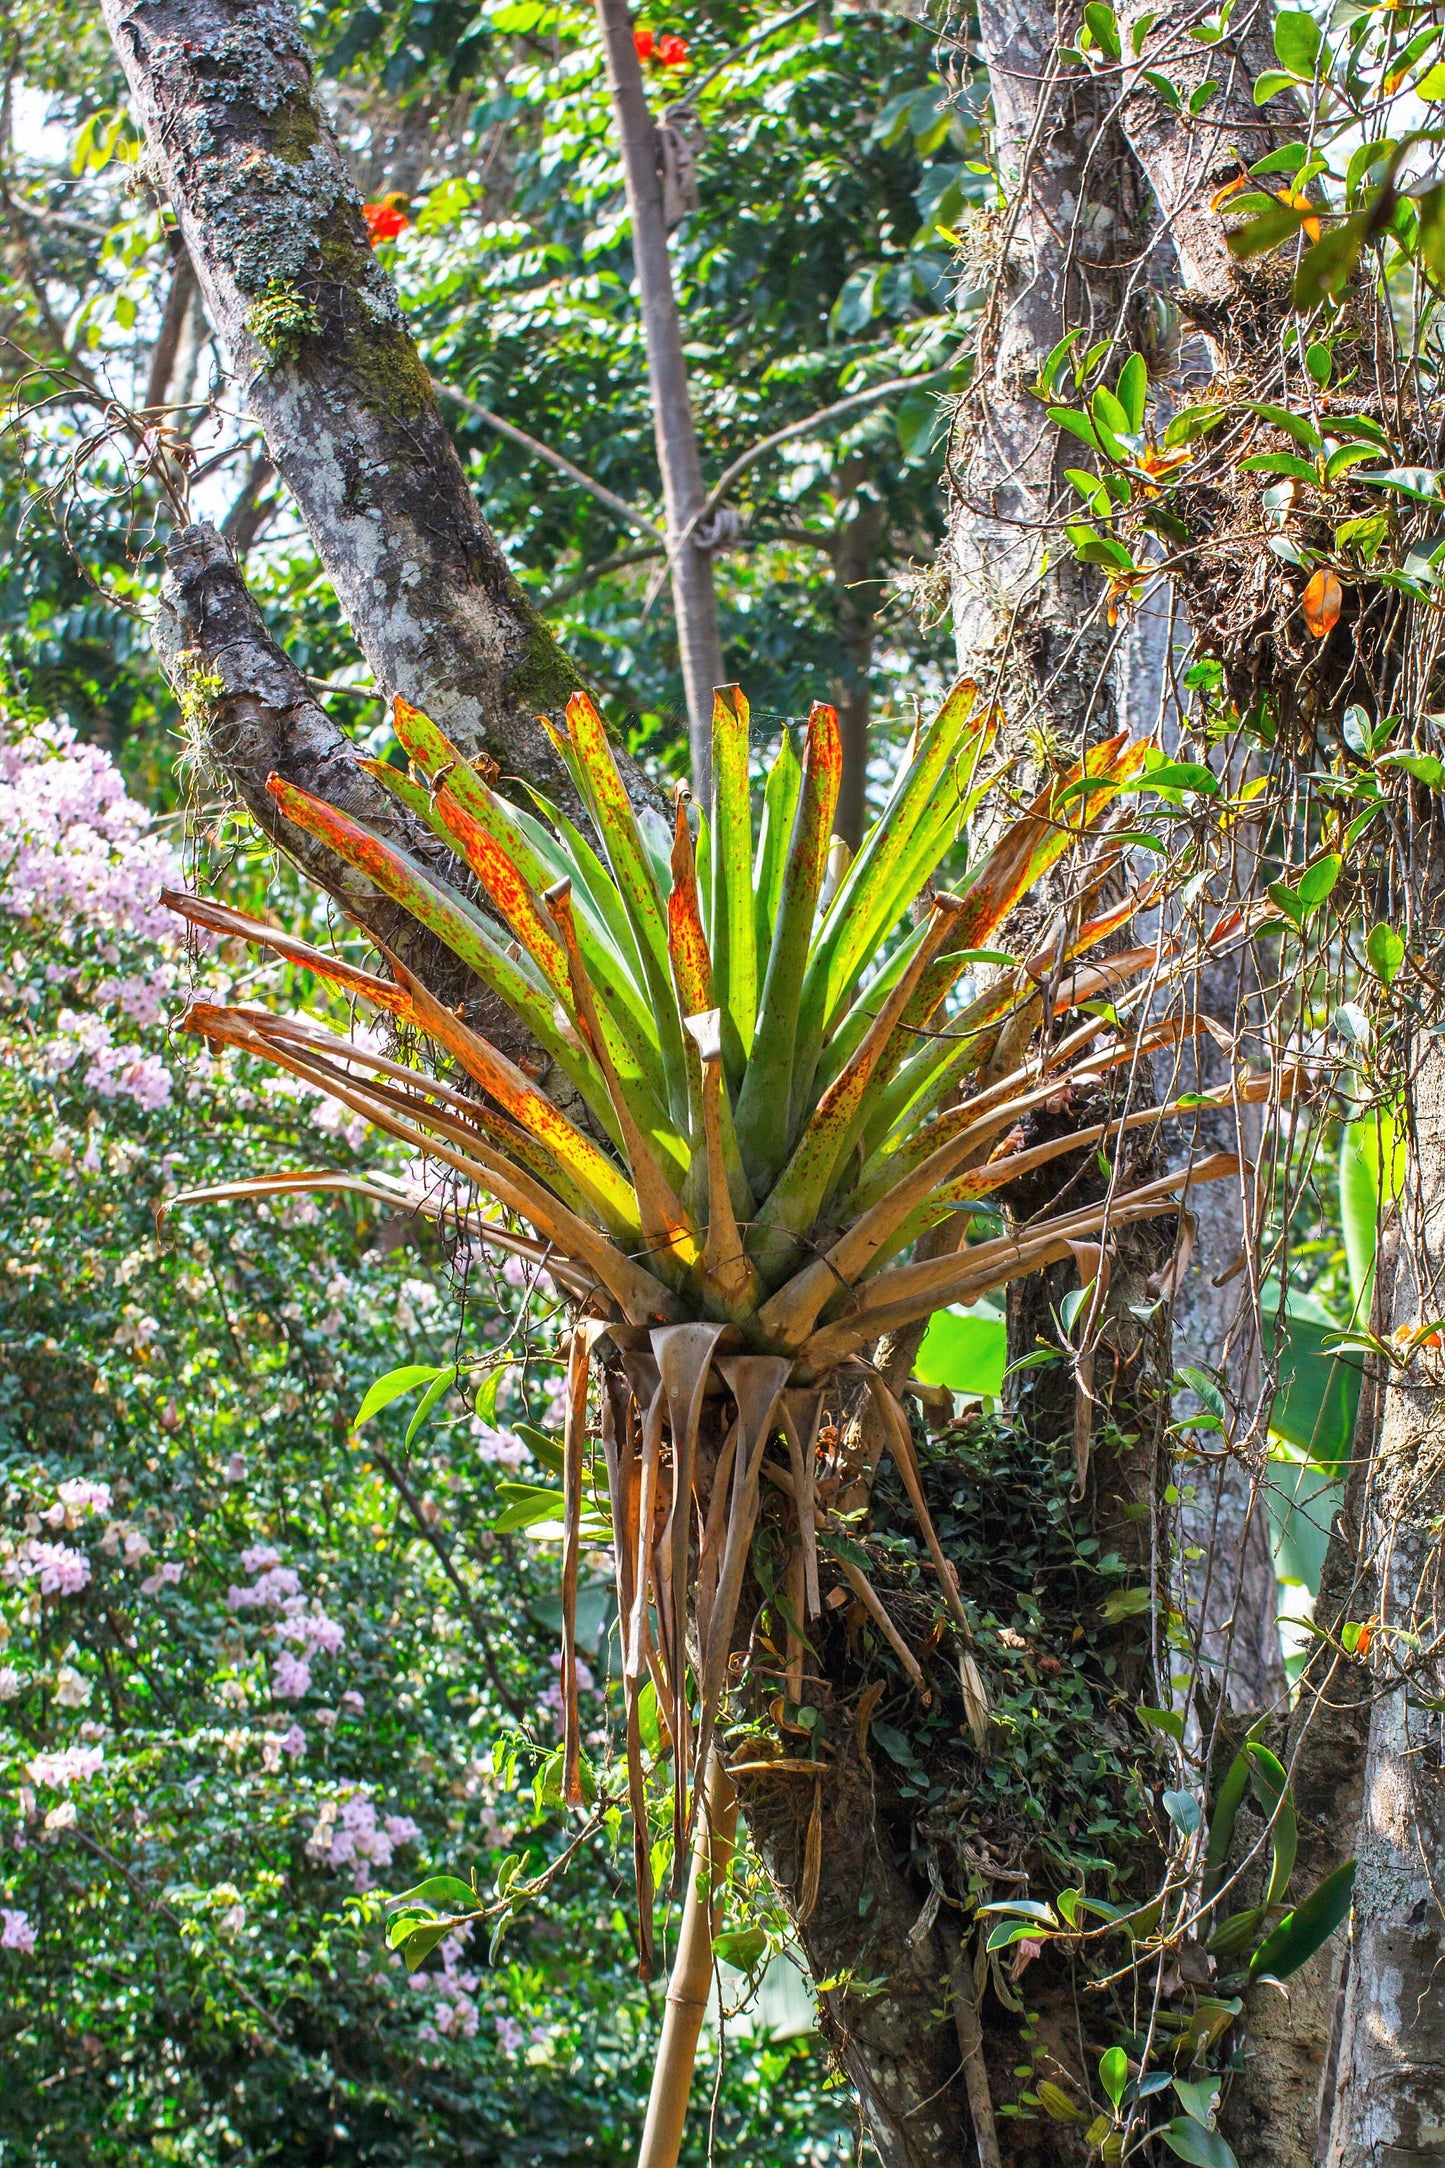 10 GIANT AIR PLANT Tillandsia Utriculata Bromeliad Spreading Airplant Giant Wild Pine Native Sun or Shade Houseplant Flower Seeds